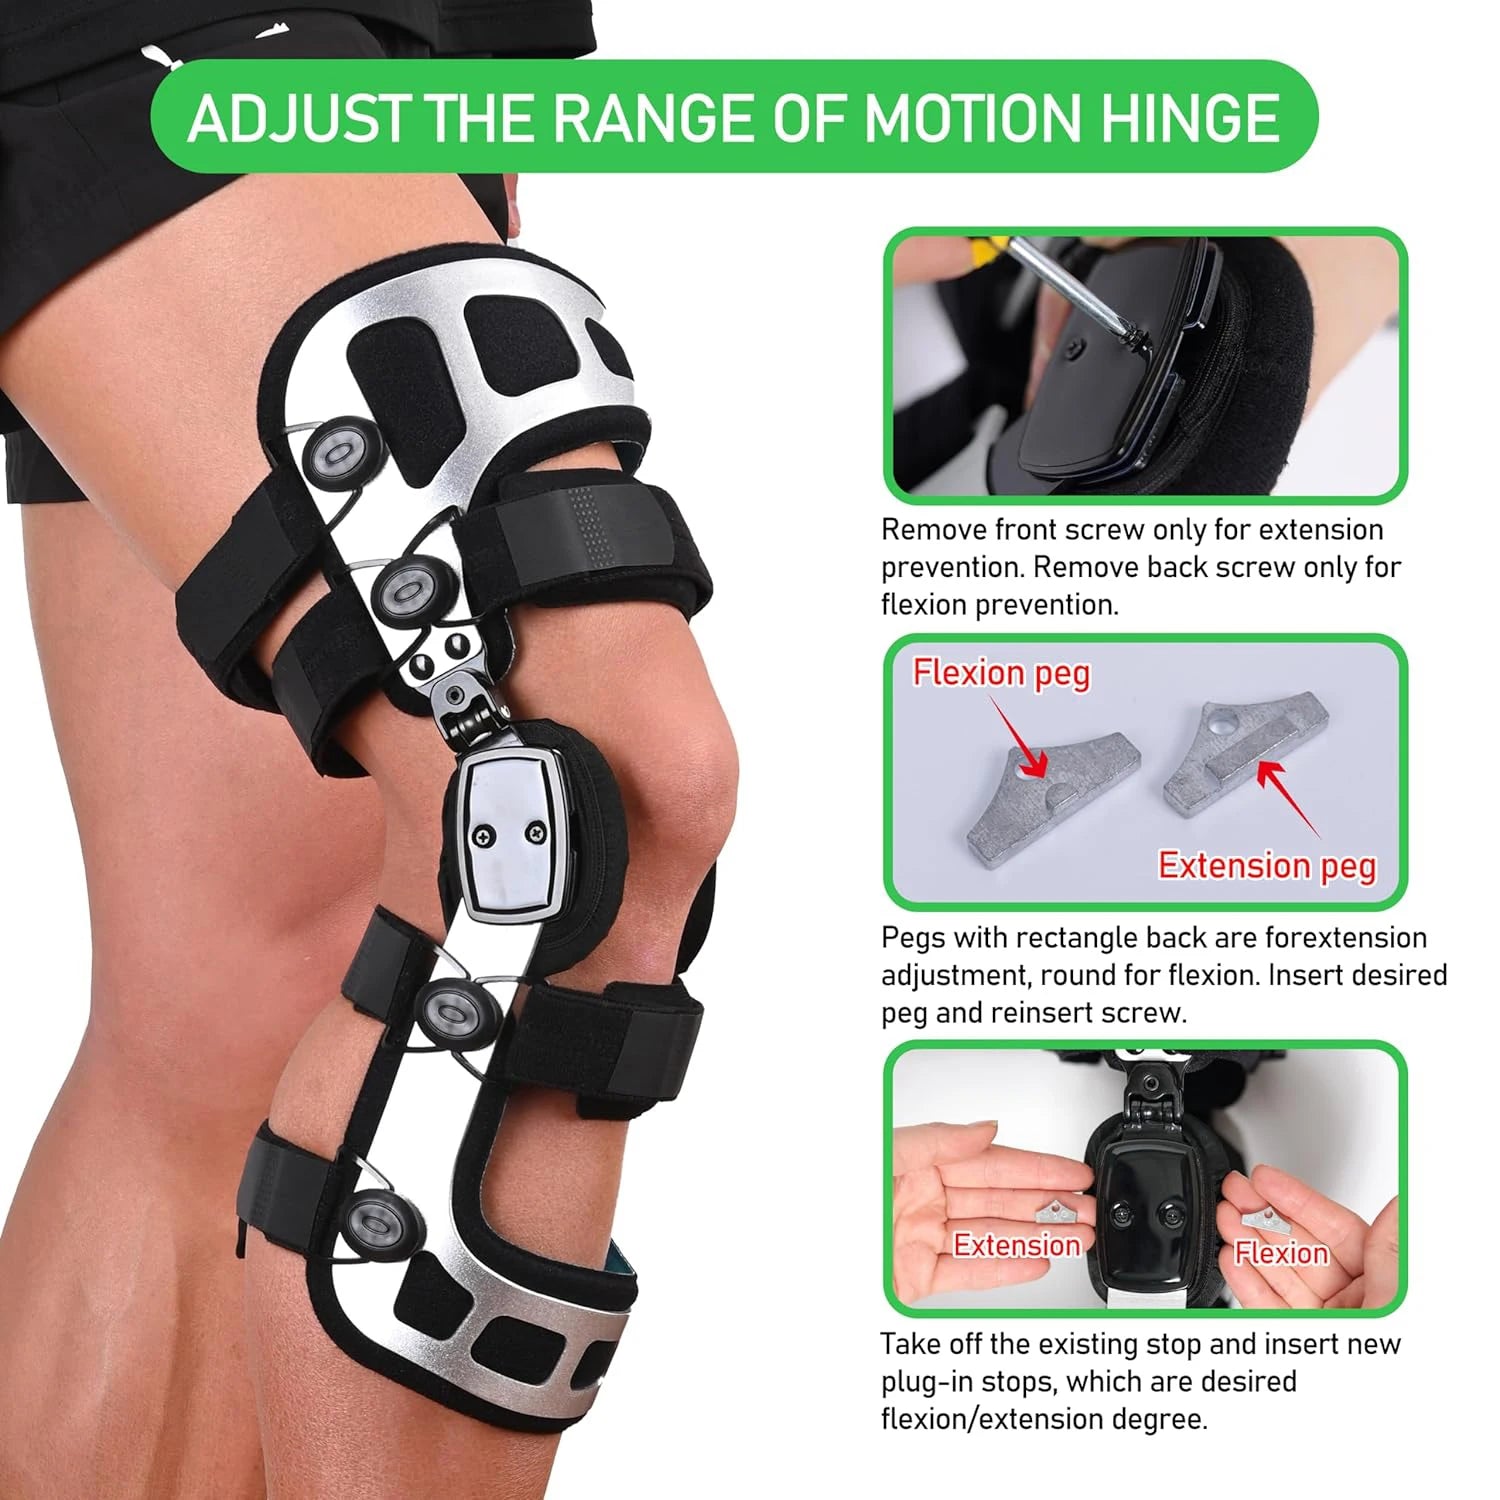 Komzer OA Unloader Knee Brace Orthopedic Ligament Injury Protector Arthritis Osteoarthritis Relief